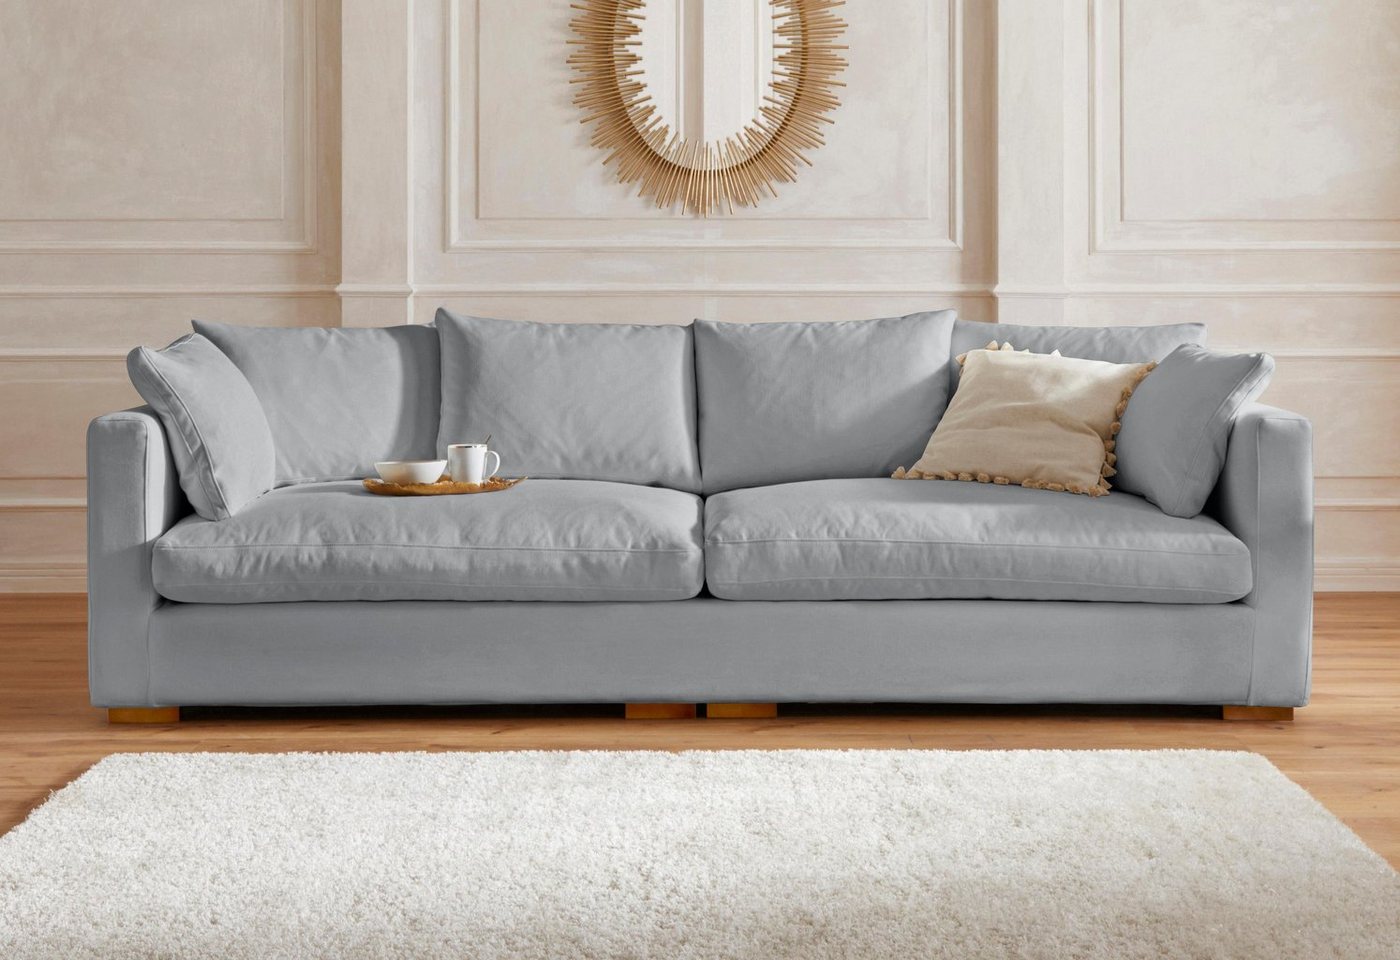 Guido Maria Kretschmer Home&Living Big-Sofa Pantin, extra weich und kuschelig, Füllung mit Federn und Daunen von Guido Maria Kretschmer Home&Living